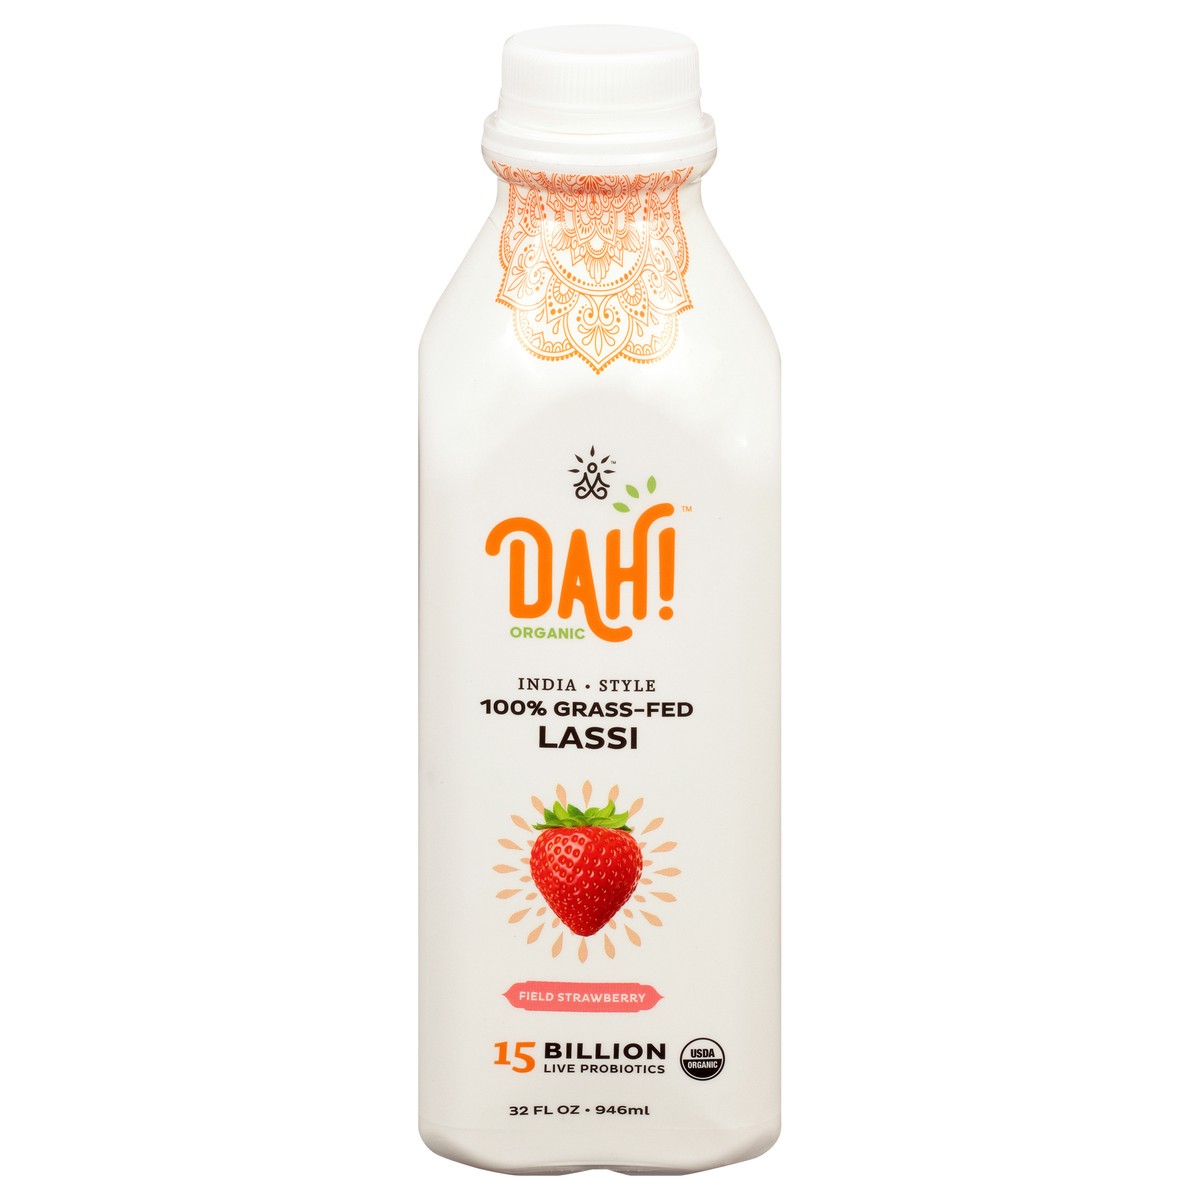 slide 1 of 13, Dahlicious DAH!™ organic lassi, field strawberry, 32 fl oz